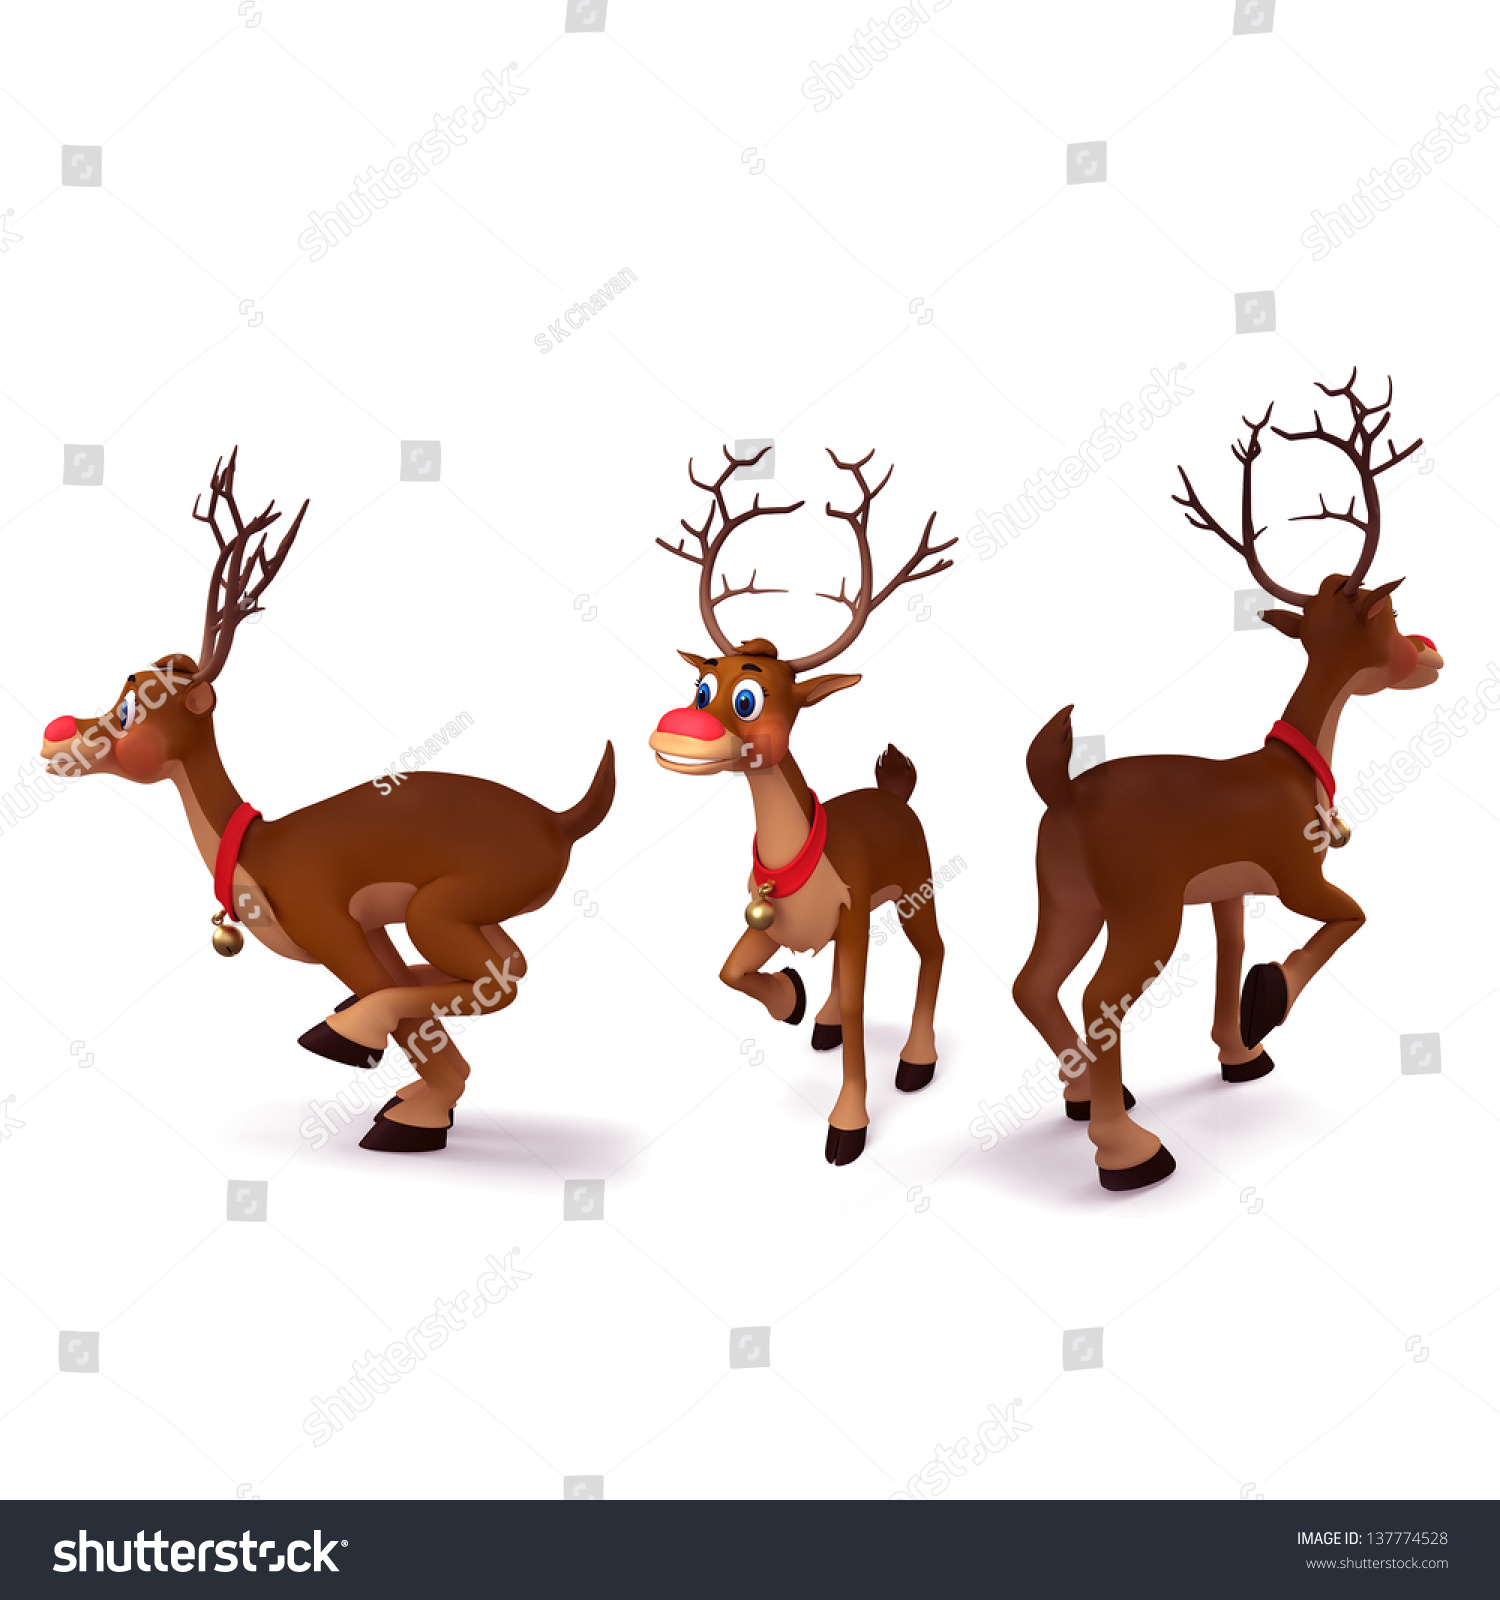 Illustration Of Christmas Reindeer - 137774528 : Shutterstock